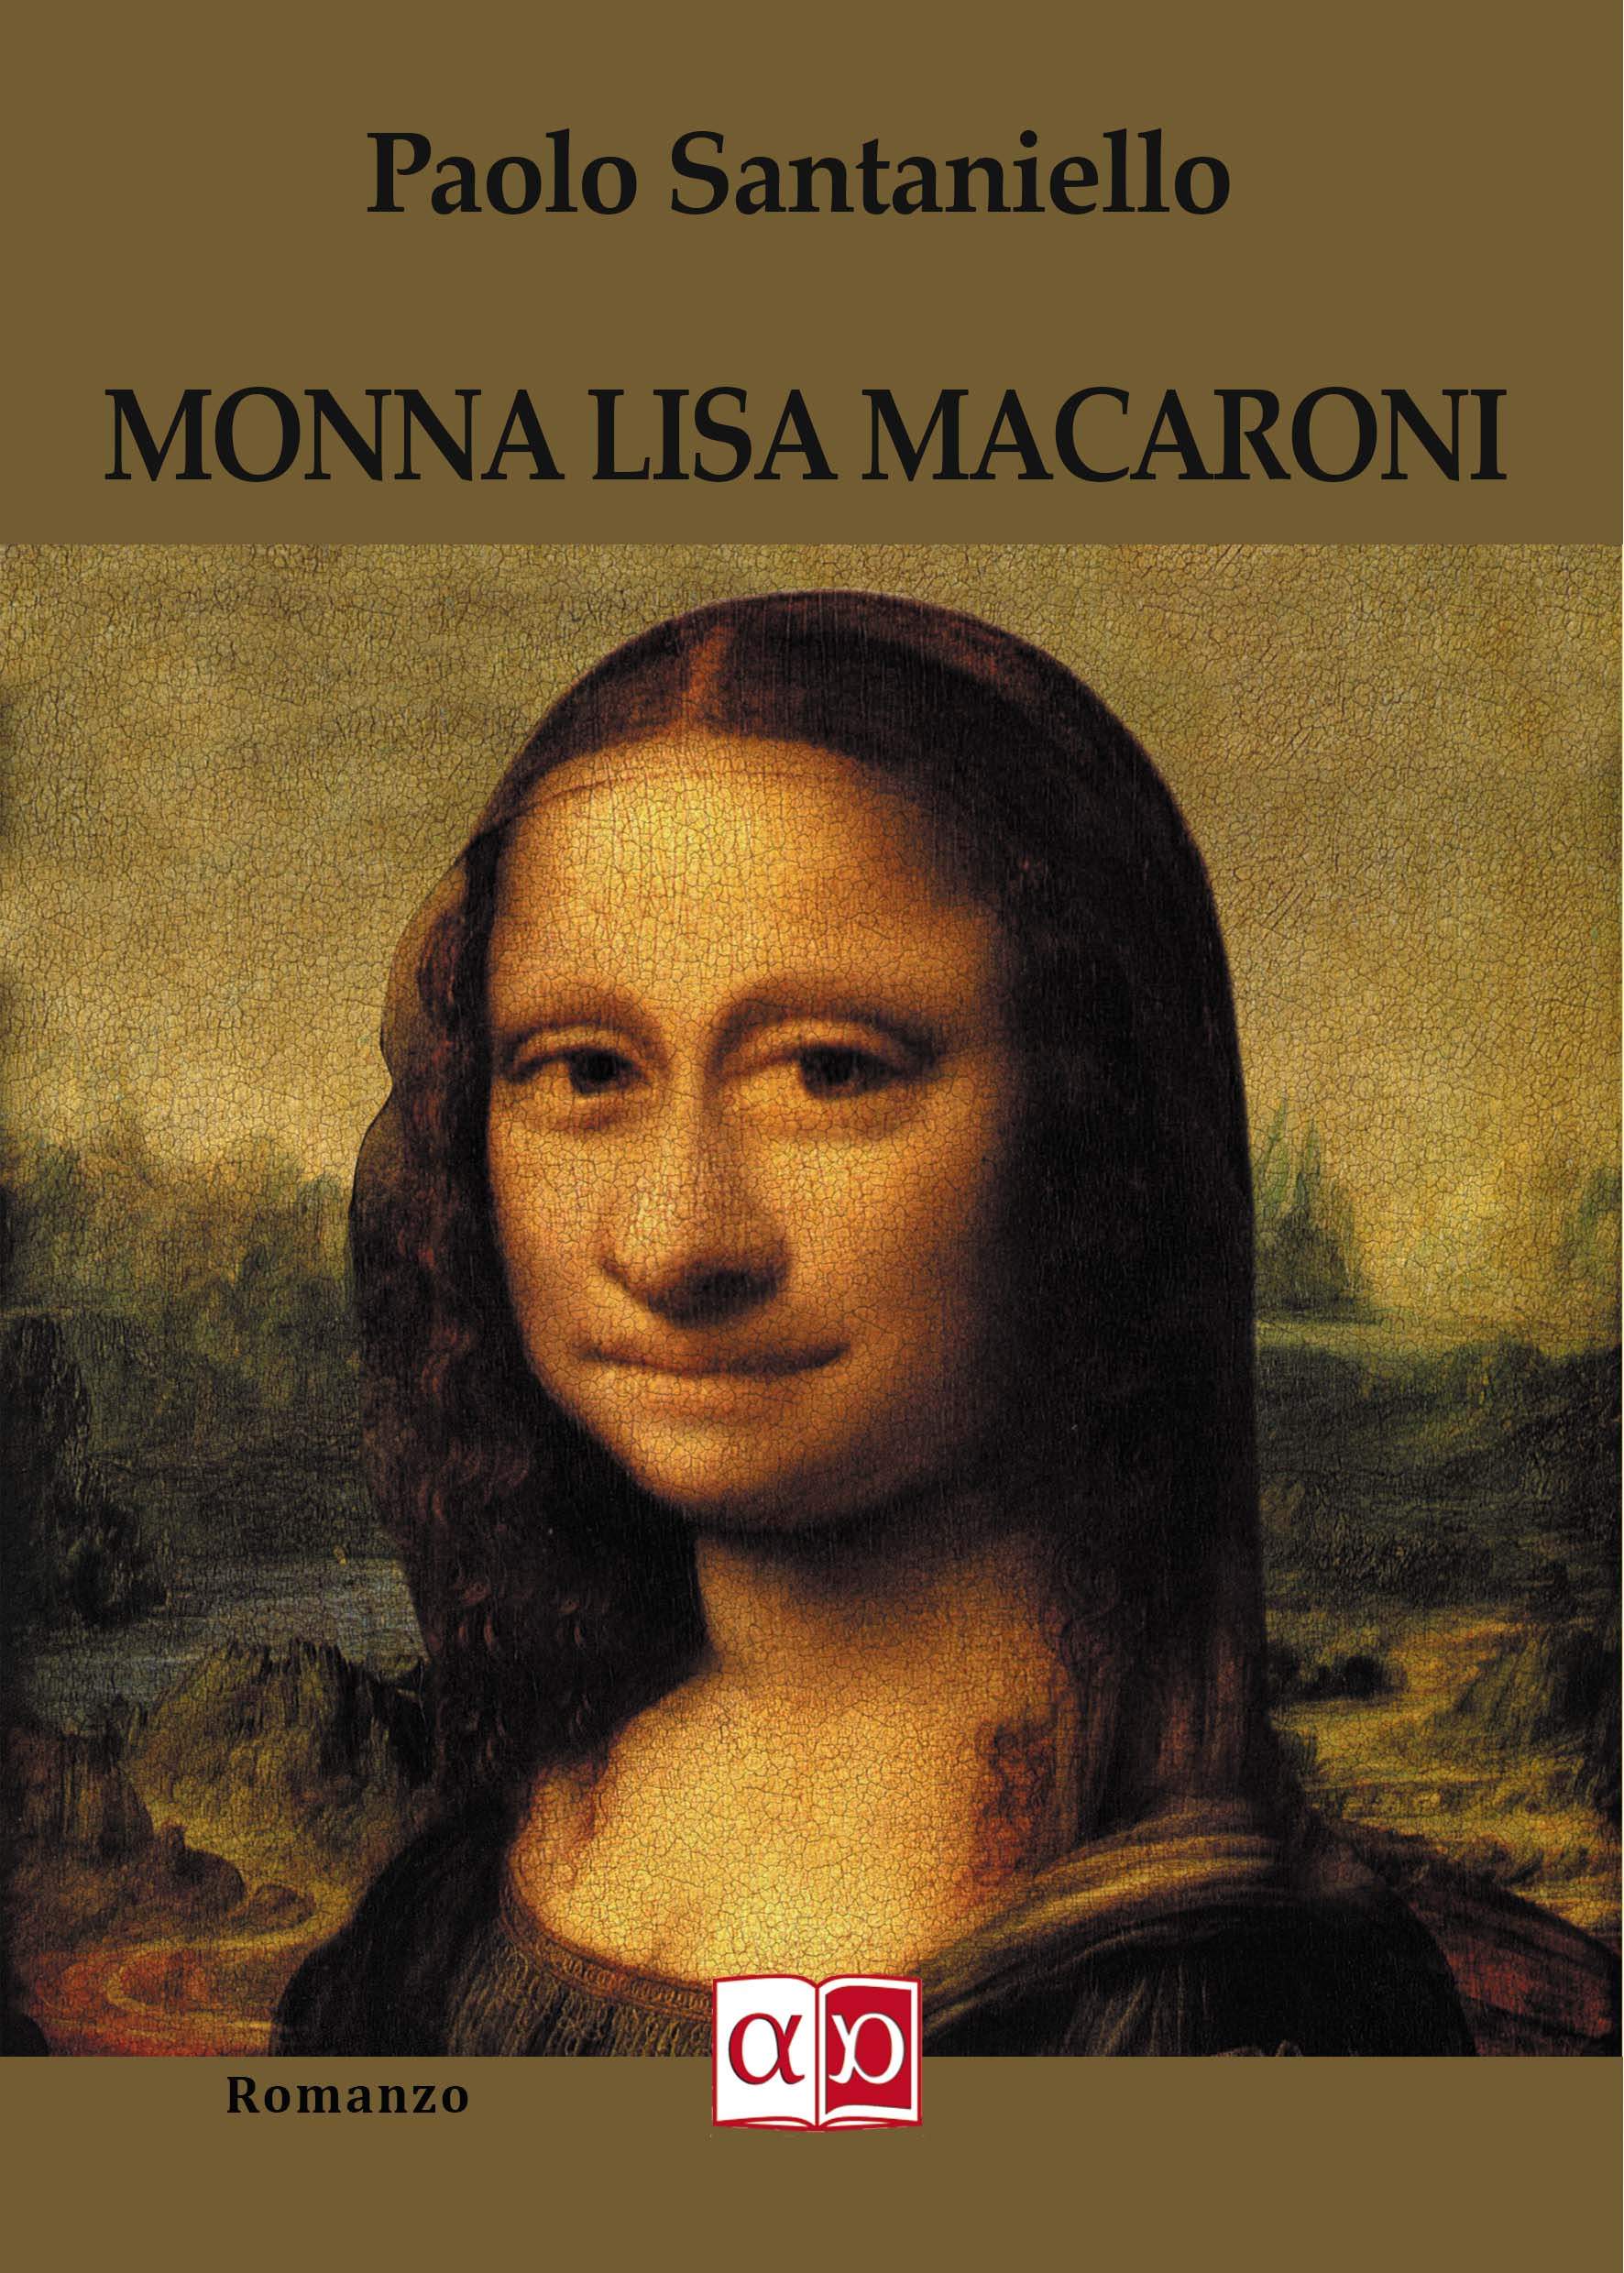 MONNA LISA MACARONI - Paolo Santaniello